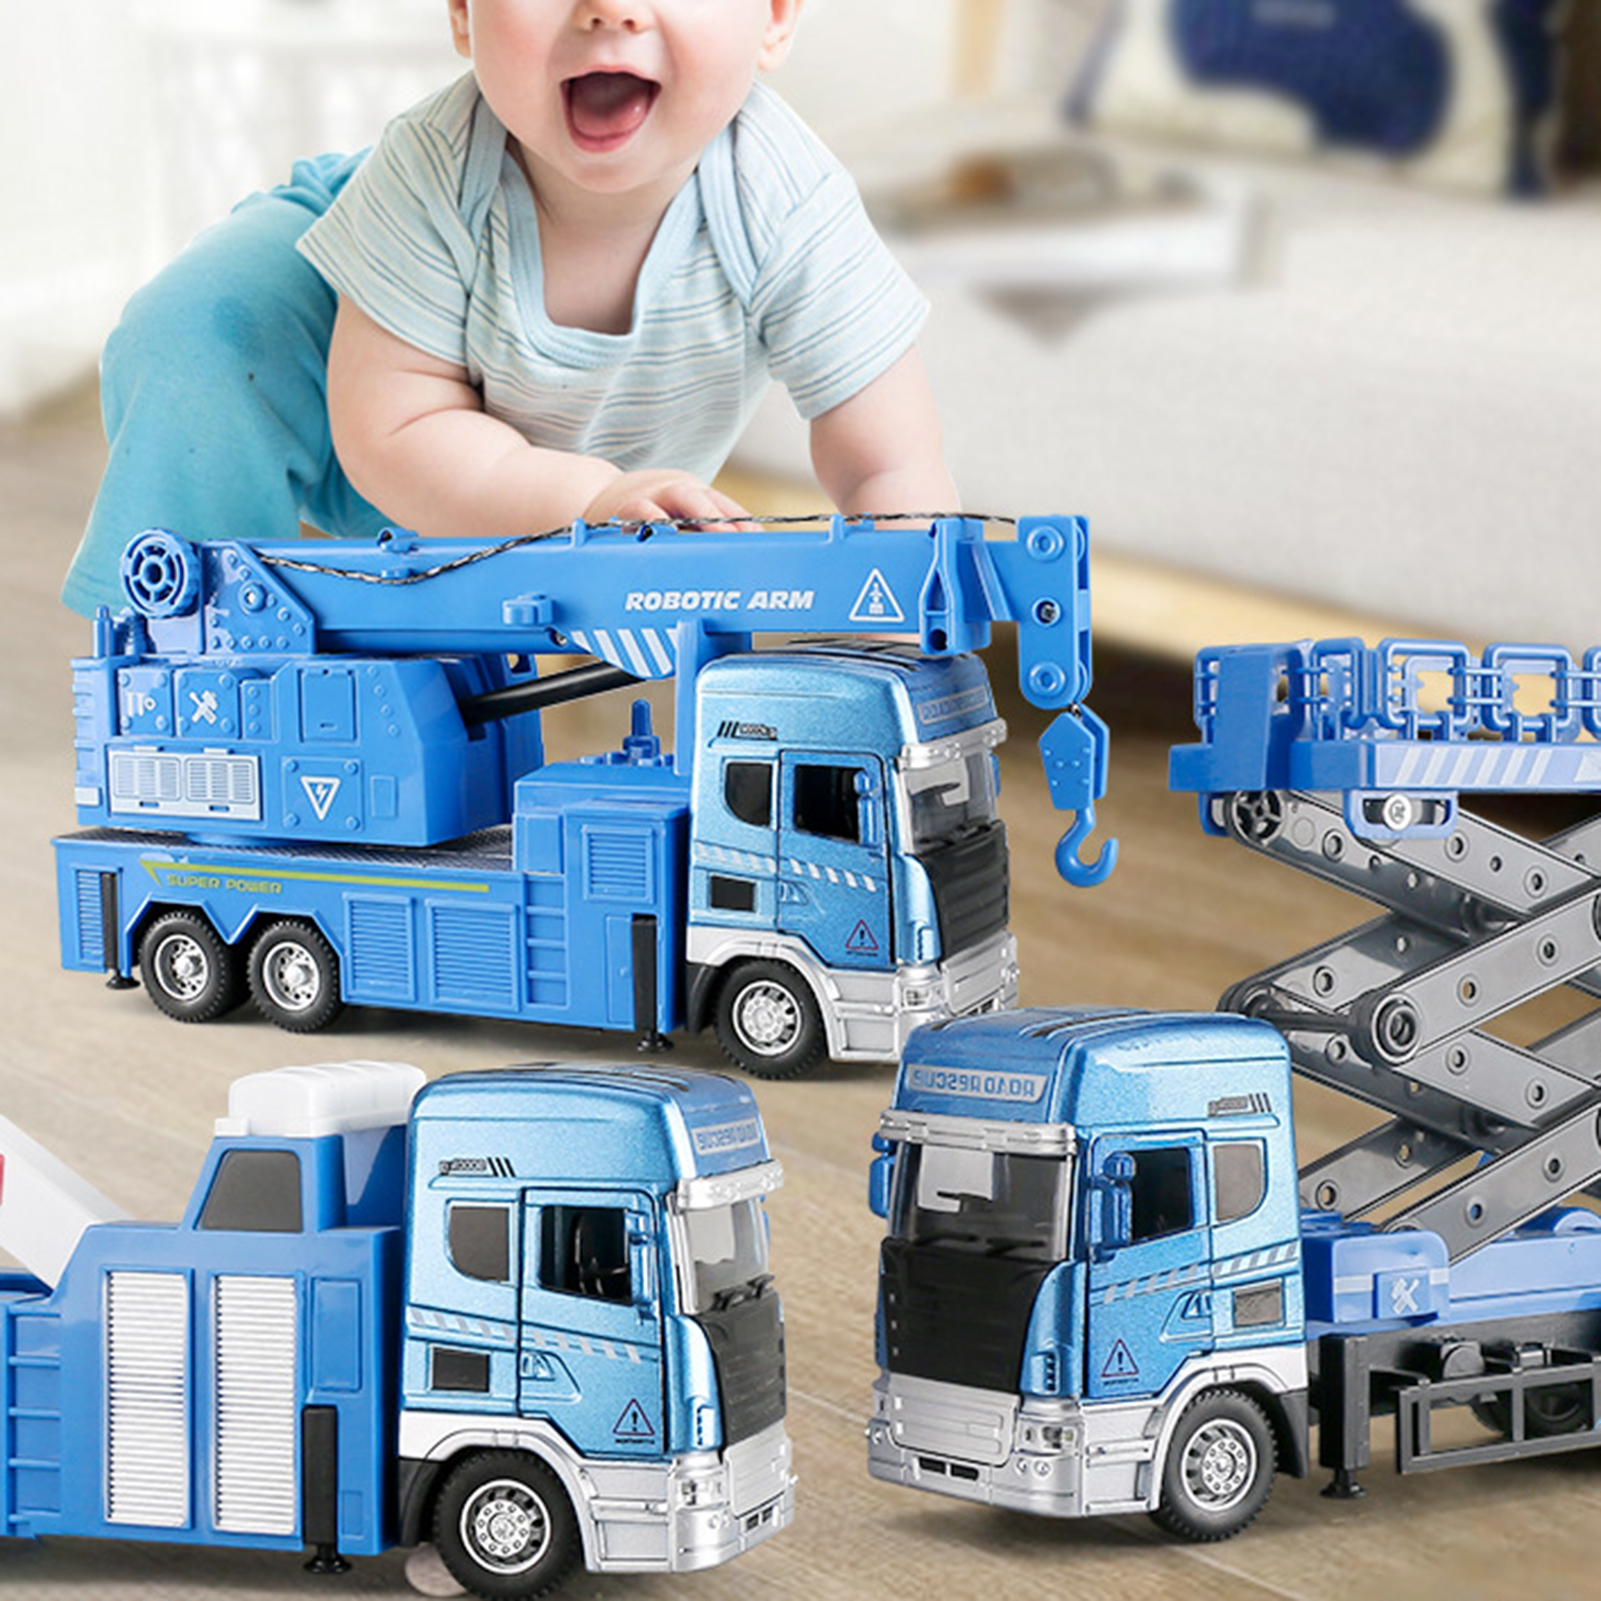 Happy Date Construction Vehicles Truck Toys, Engineering Truck Die Cast Alloy Truck Head, Tractor Trailer Excavator Dump Loader Cement Forklift Sandbox Gift - image 3 of 9